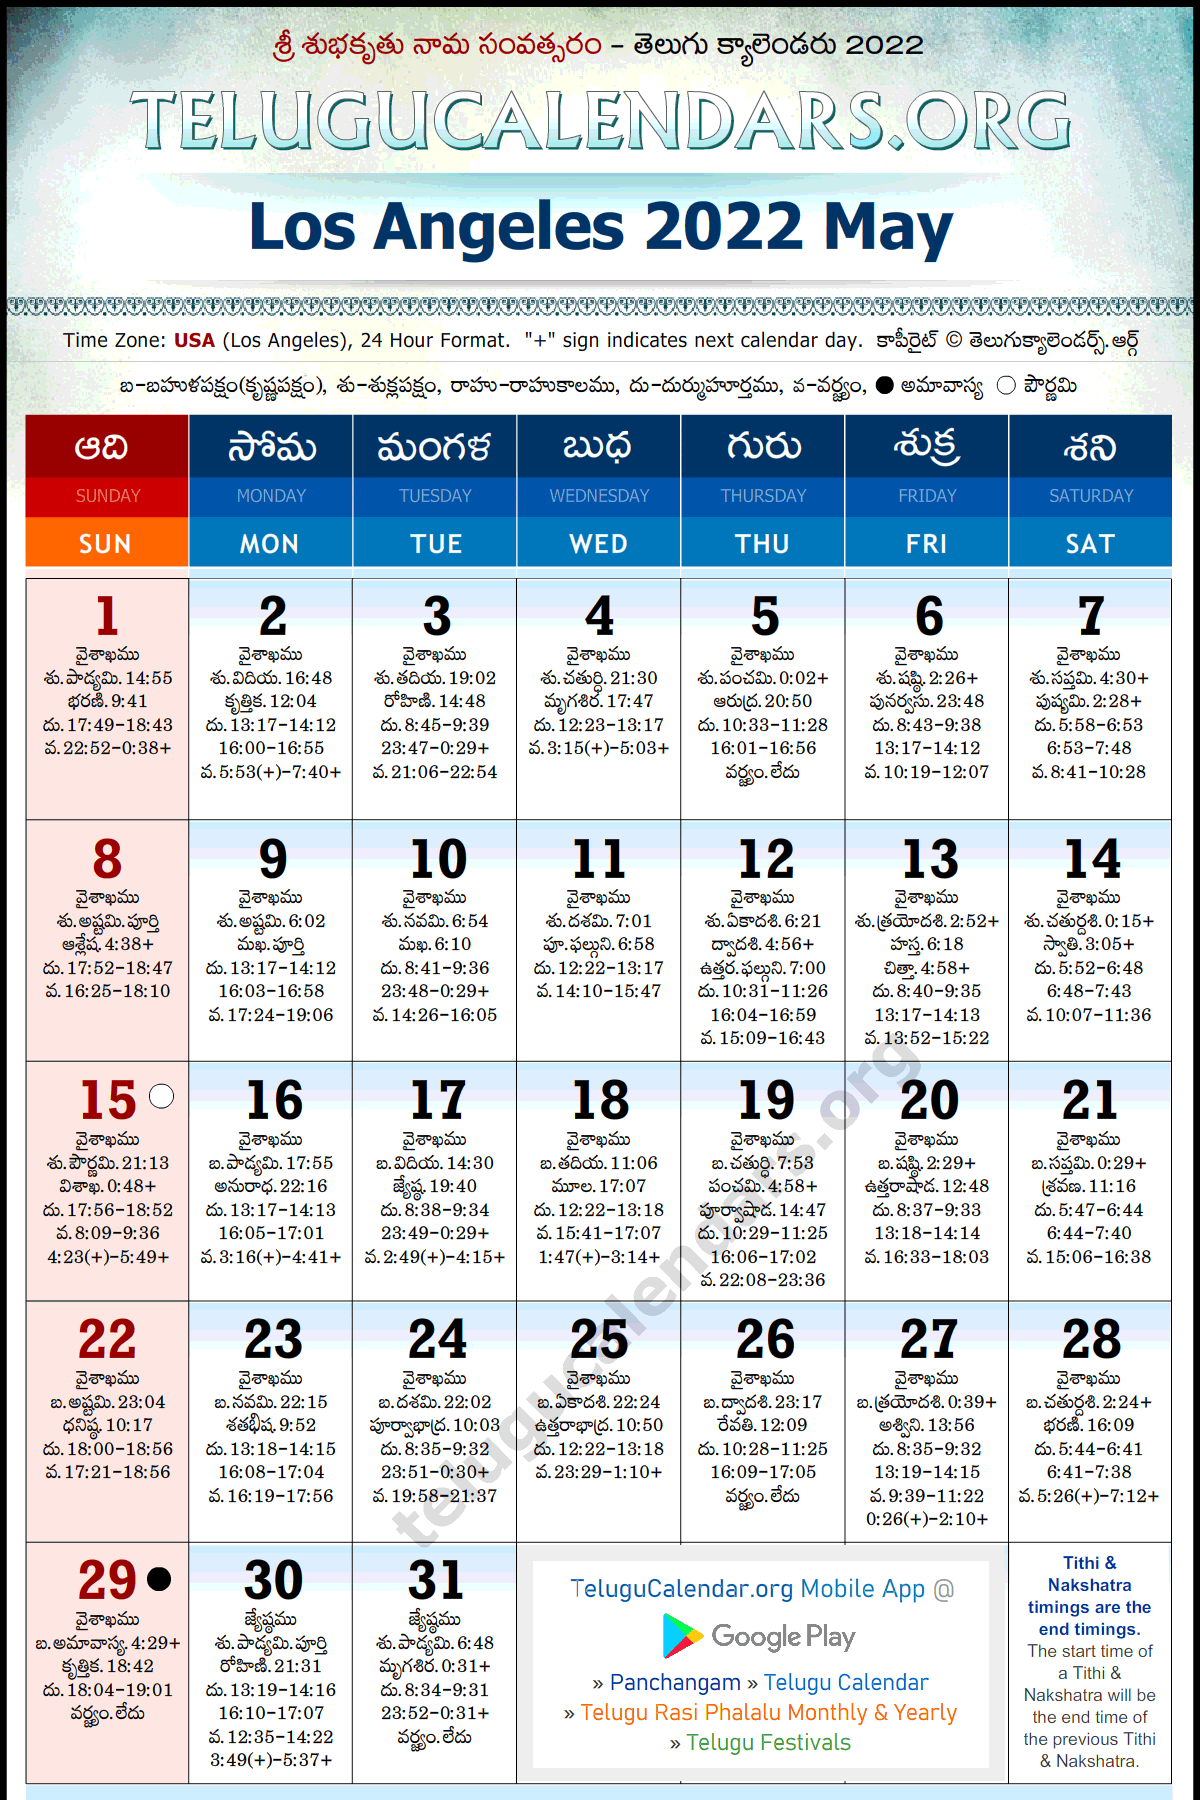 Telugu Calendar 2022 May, Los Angeles